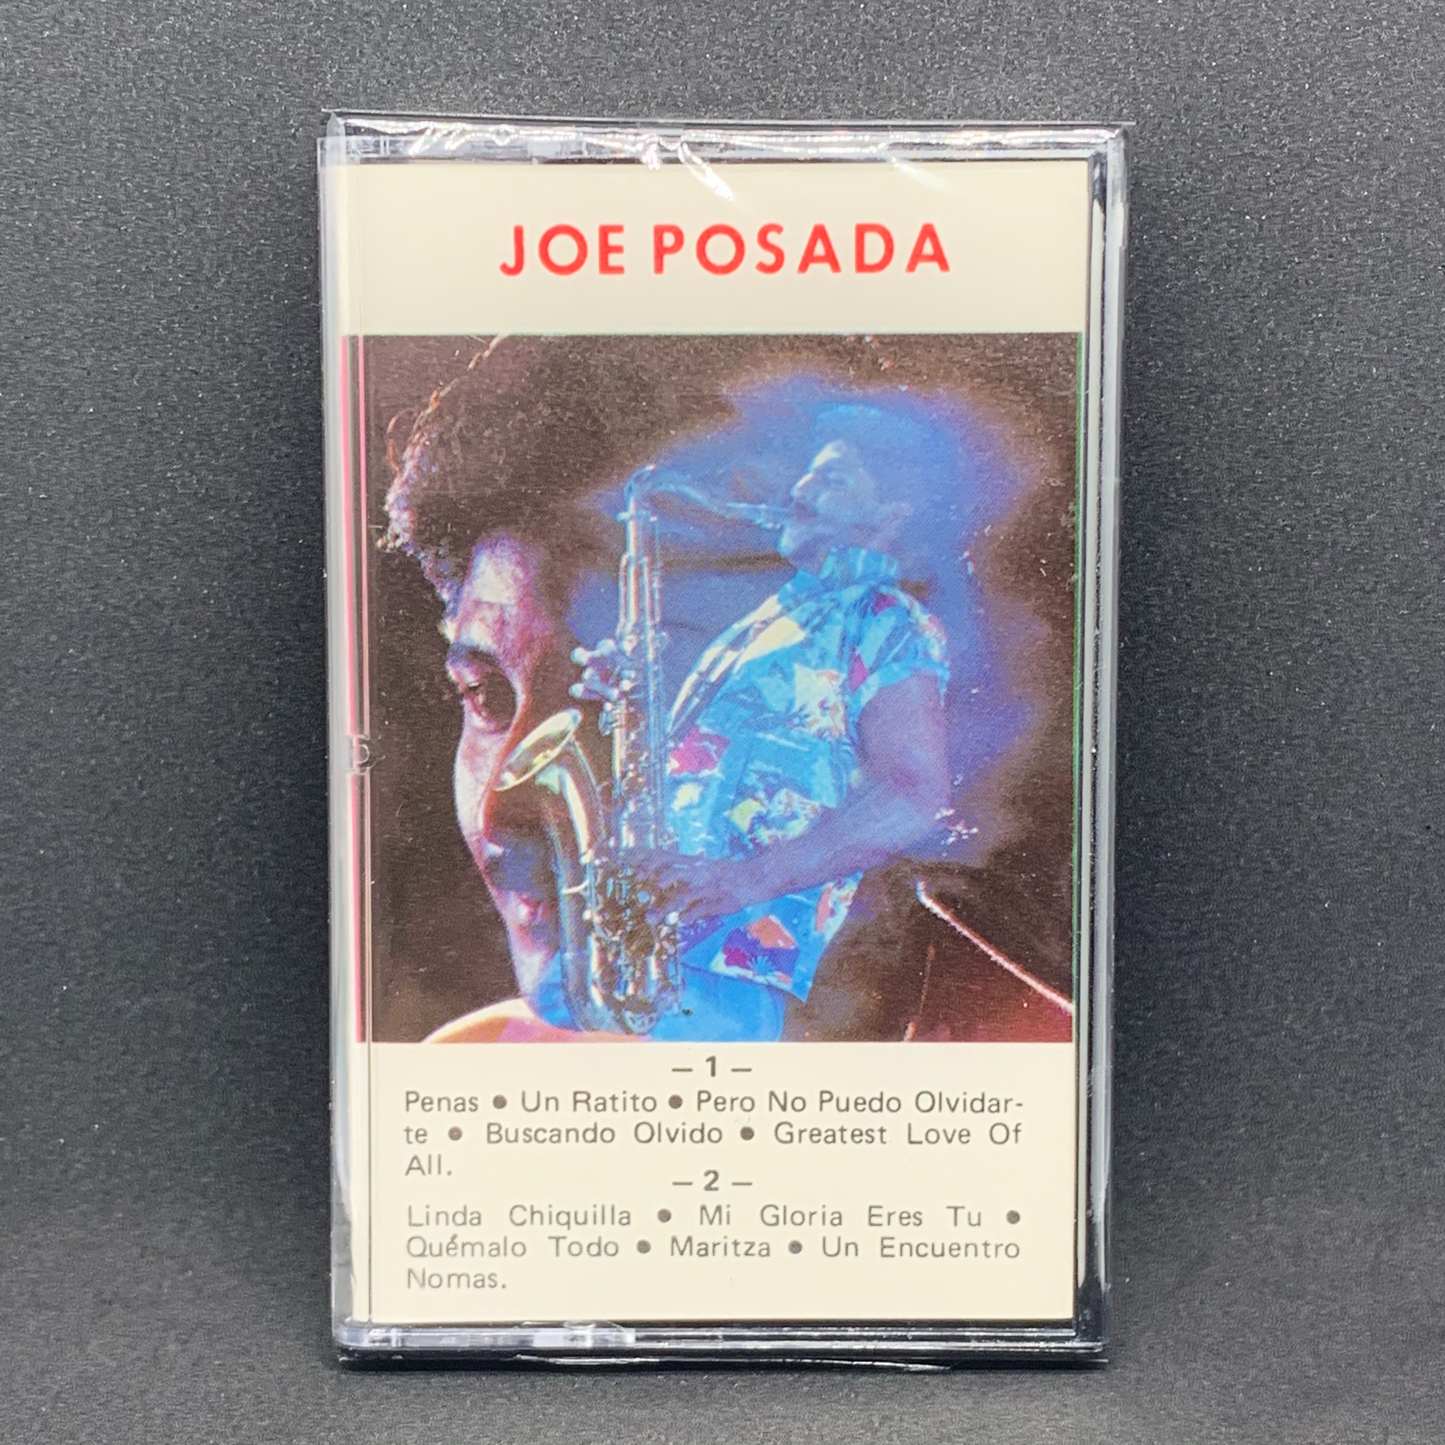 Joe Posada - Penas (Cassette)